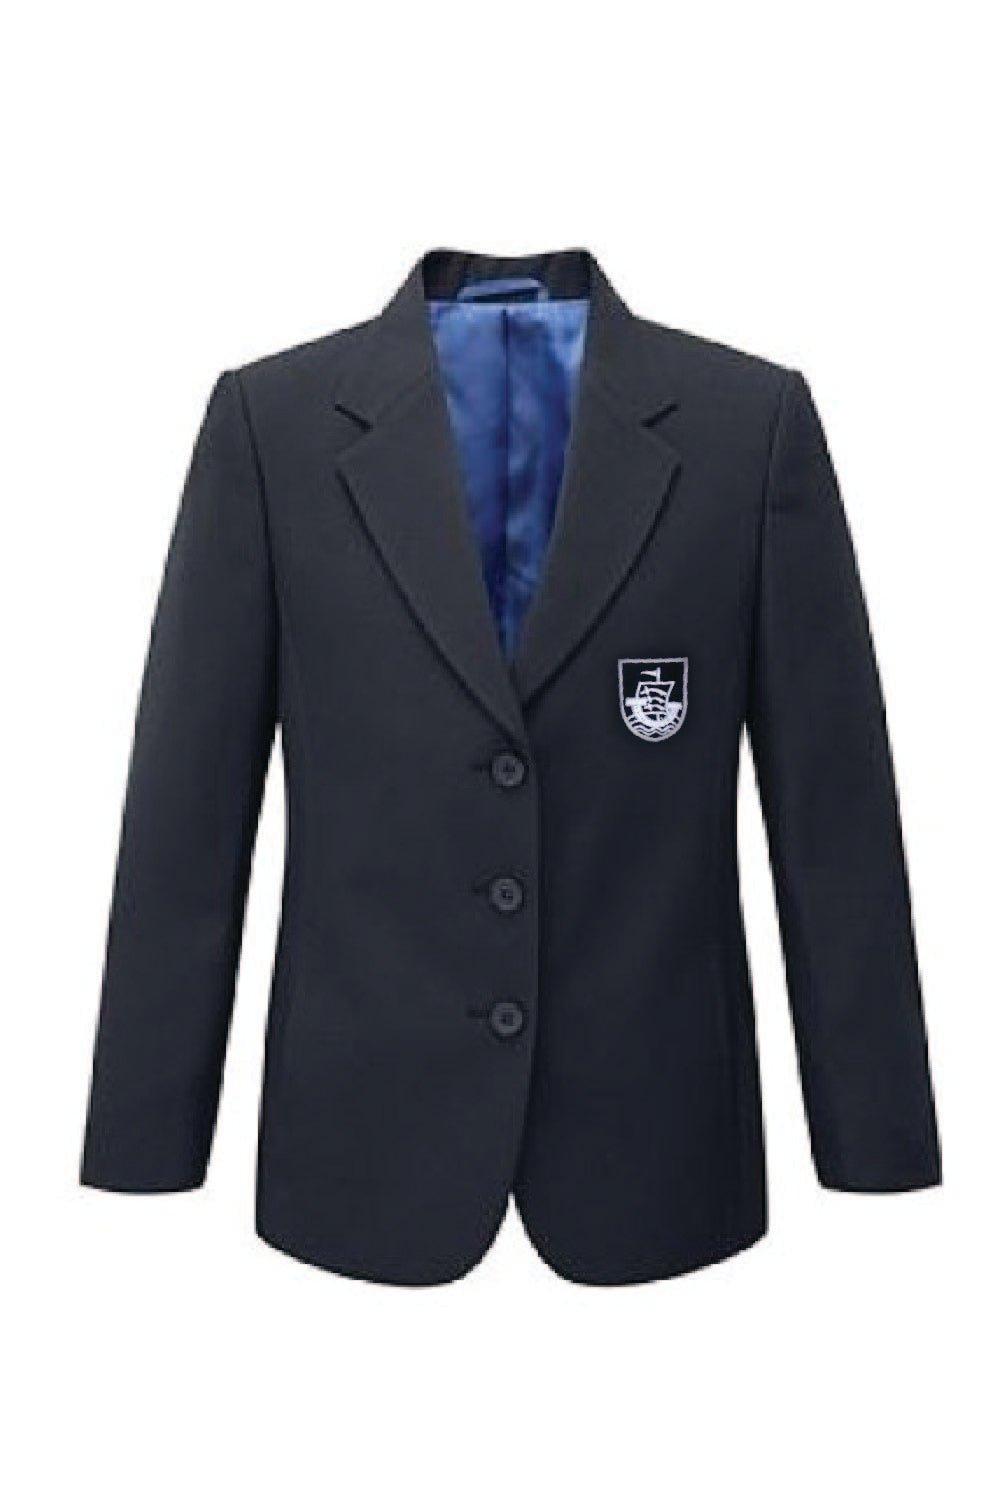 Hassenbrook Girls School Blazer - Uniformwise Schoolwear